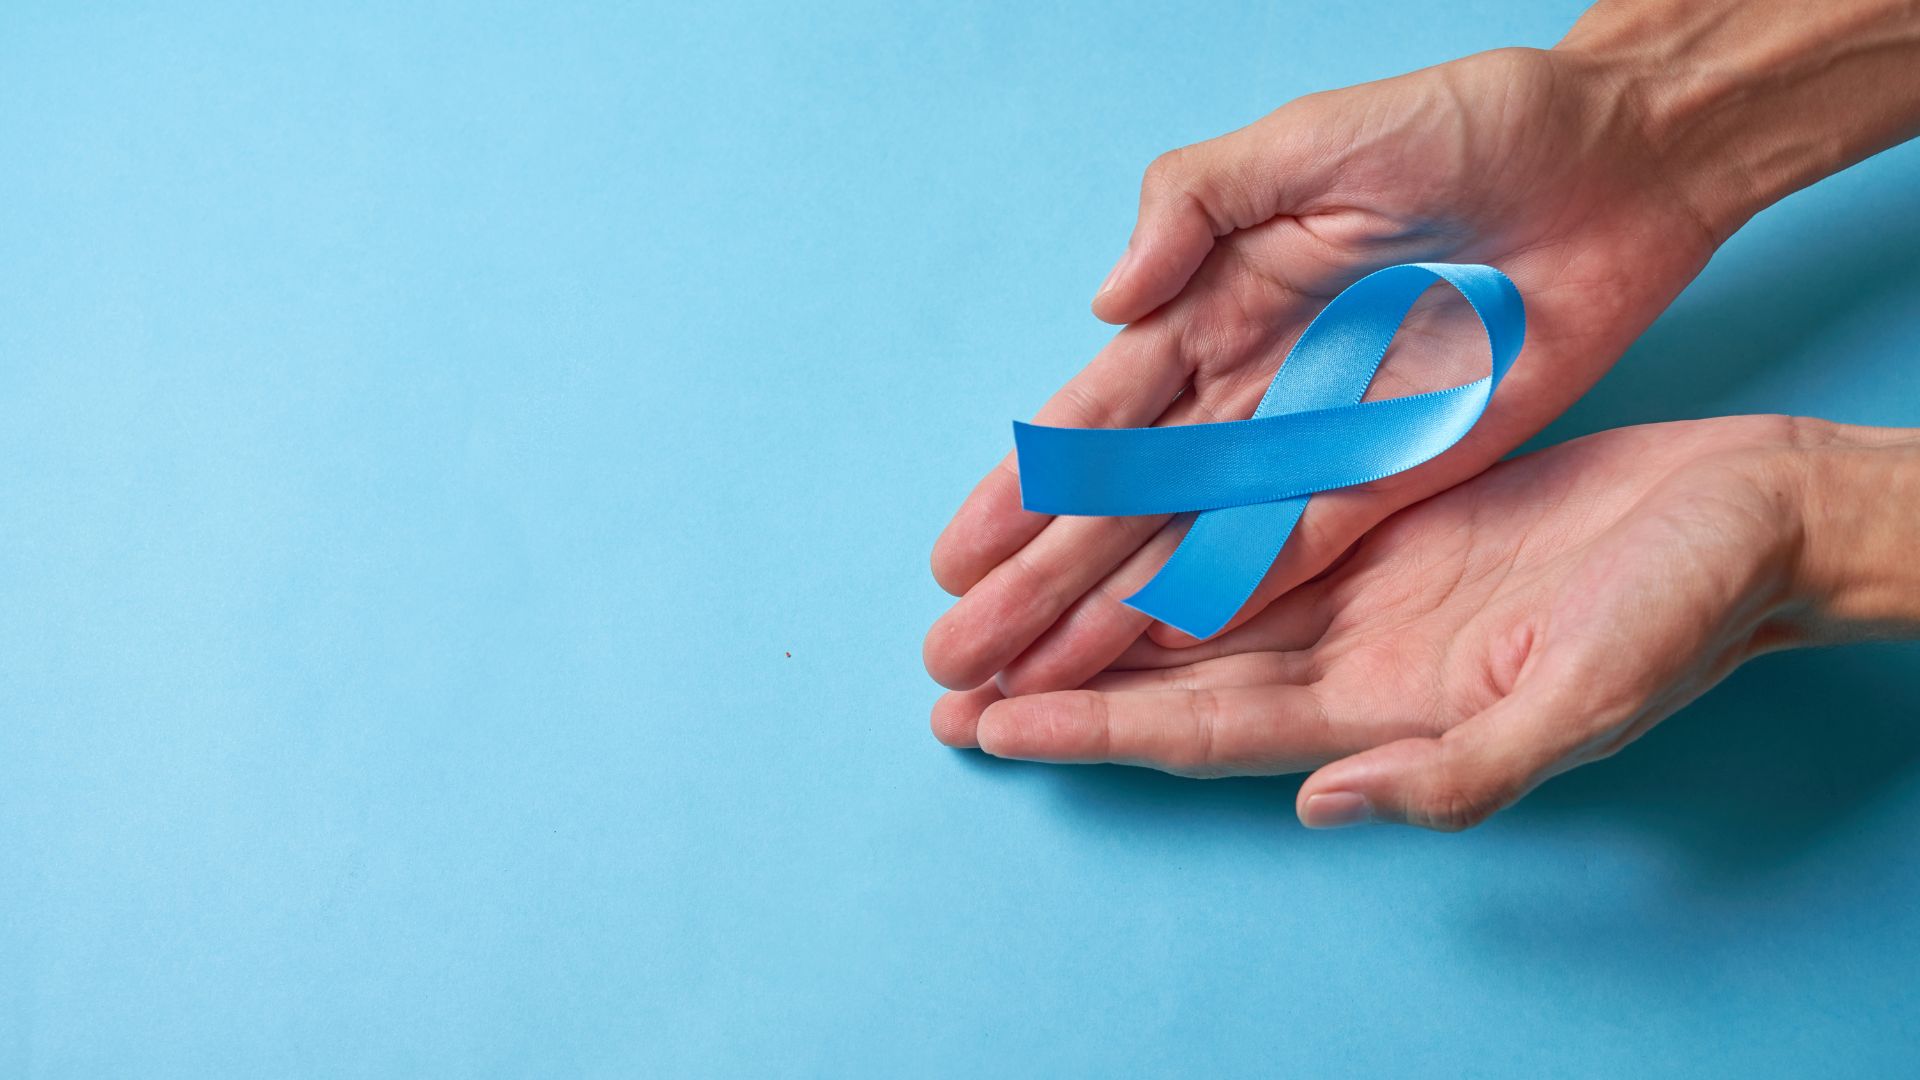 Prostatakrebs, blaue Schleife in Hand